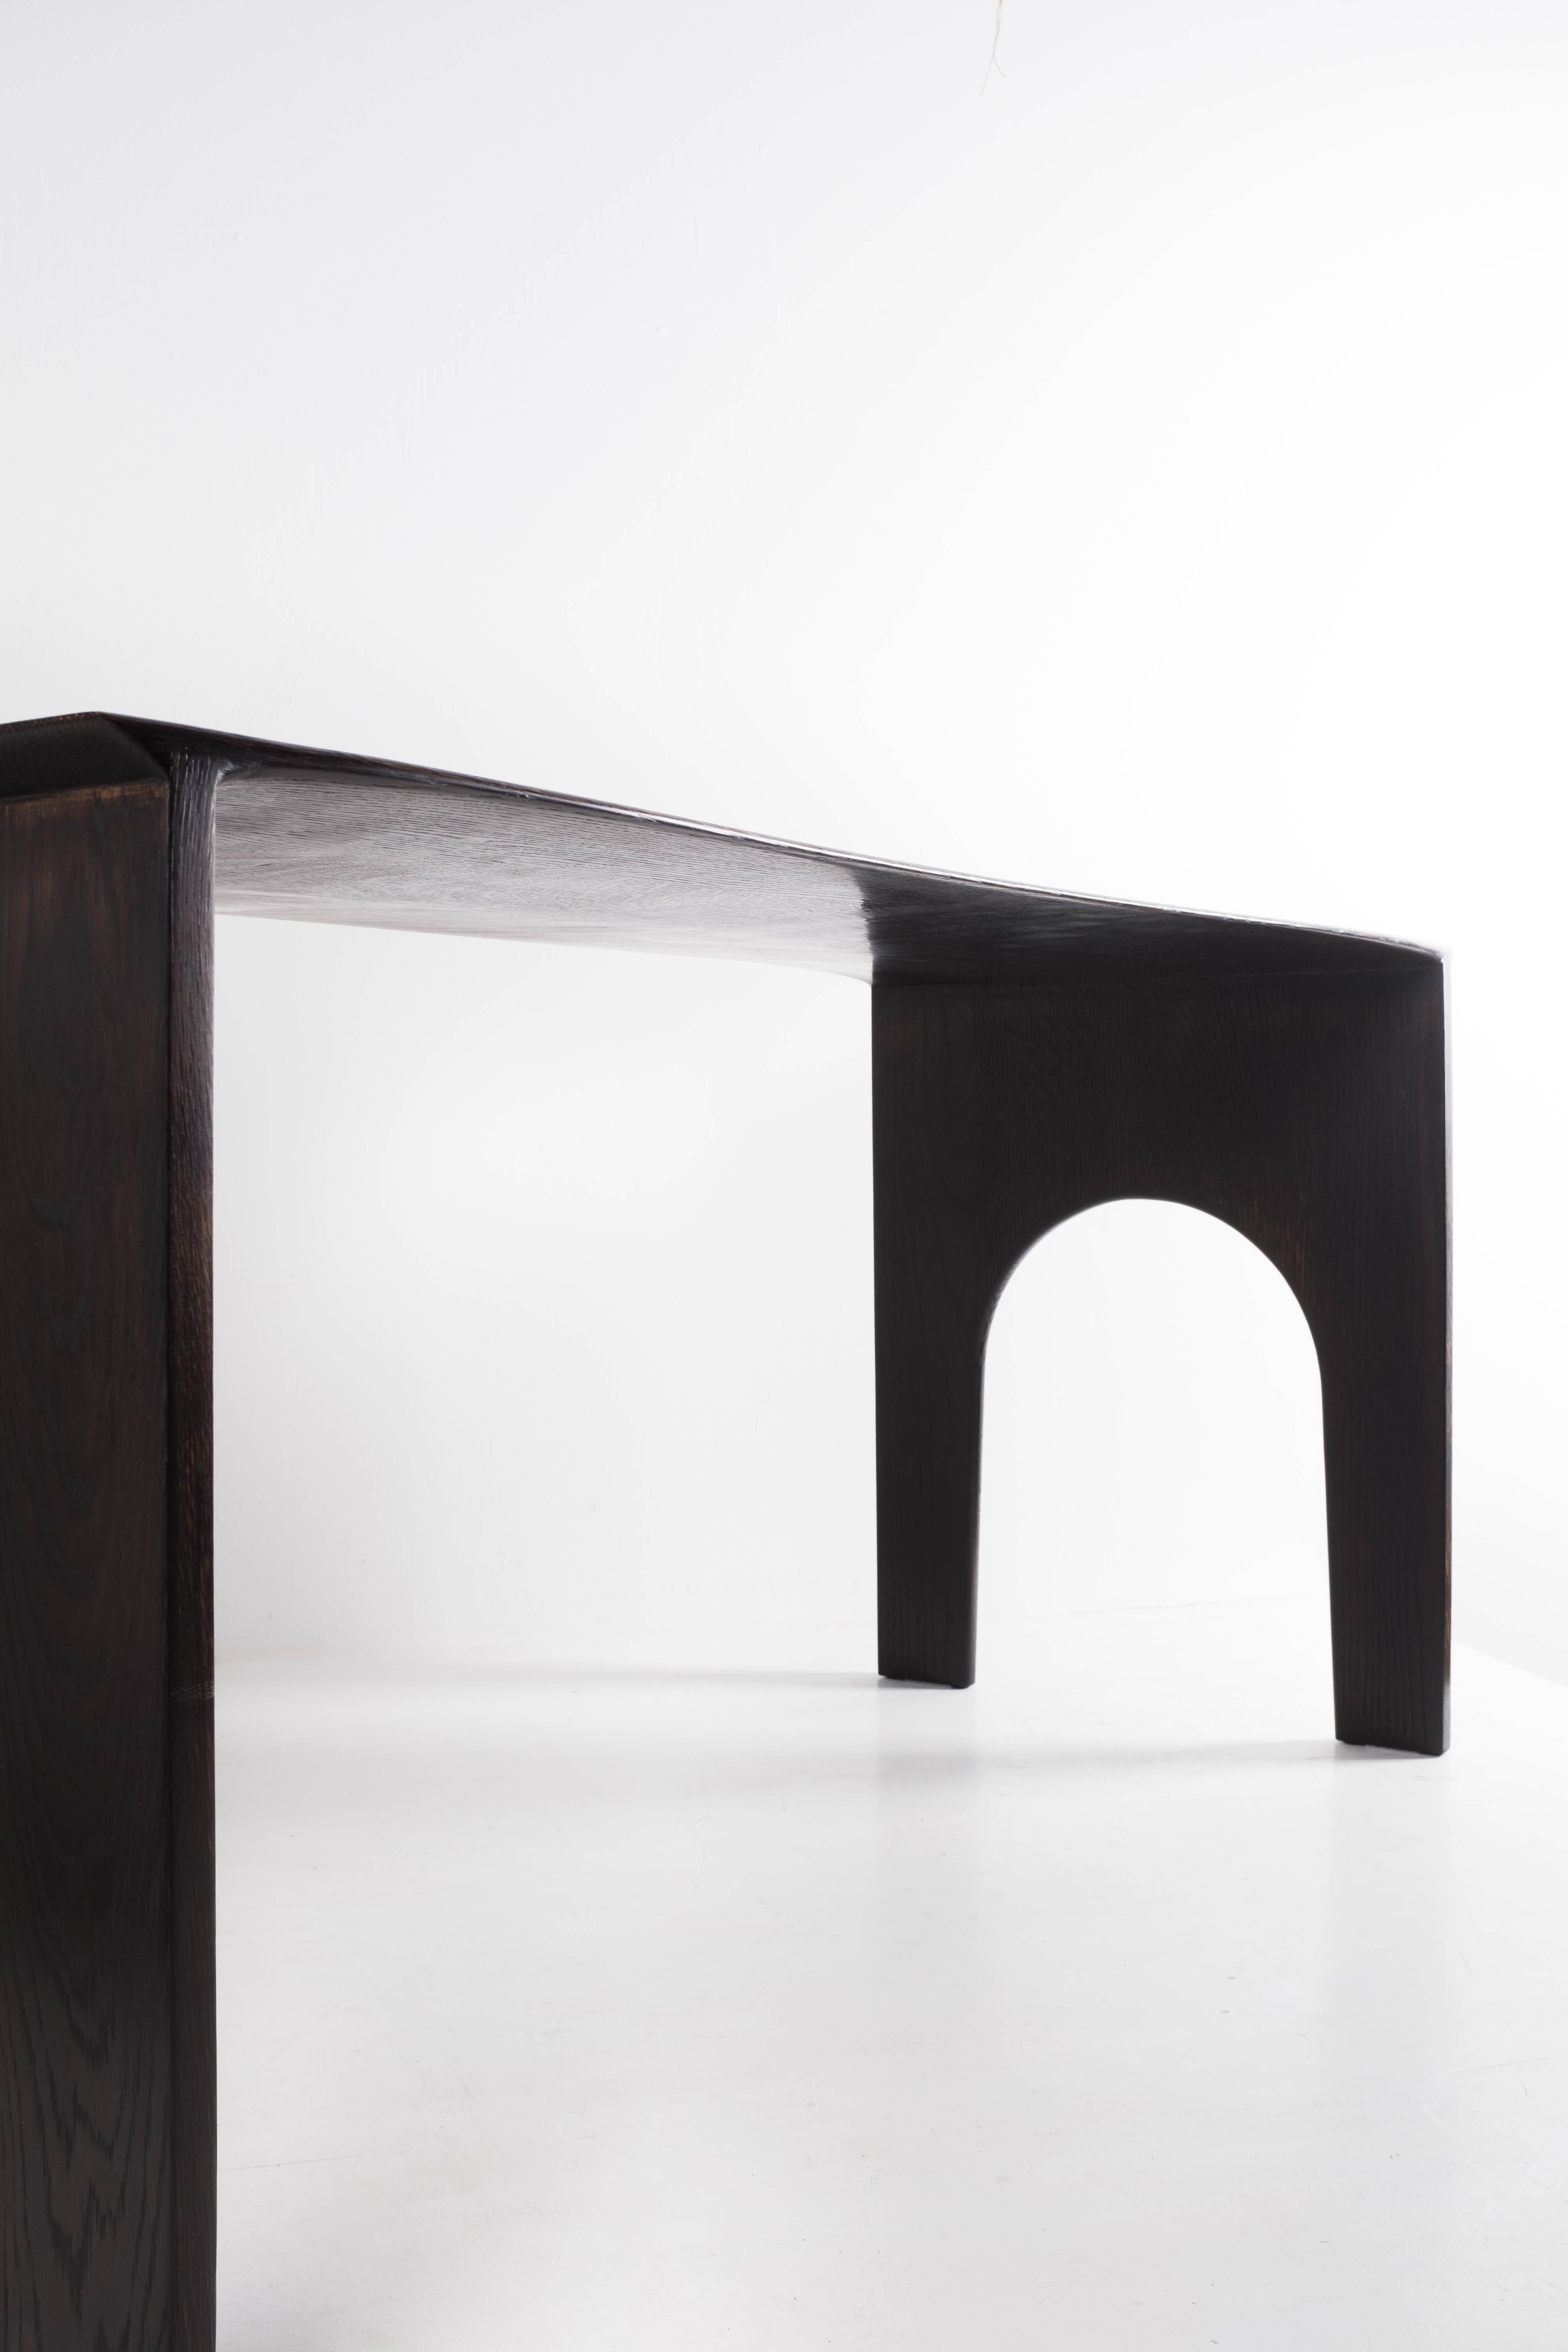 Contemporary Solid Oak Sculptural Desk by Lukas Cober